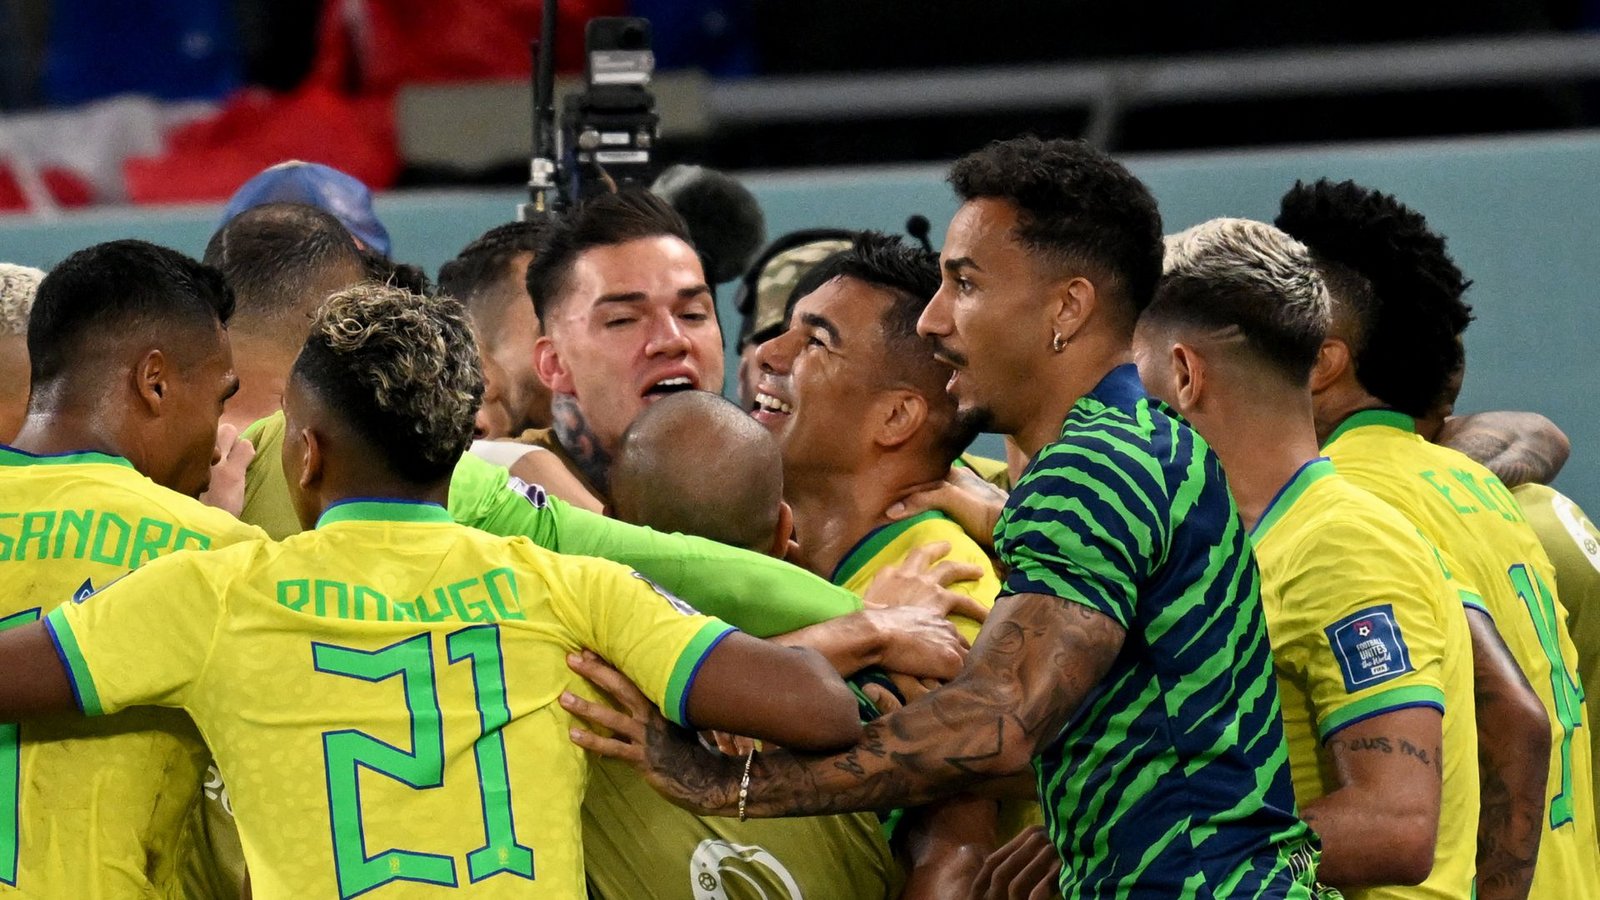 Brasiliens Spieler bejubelten das 1:0 durch Casemiro.Foto: dpa/Federico Gambarini